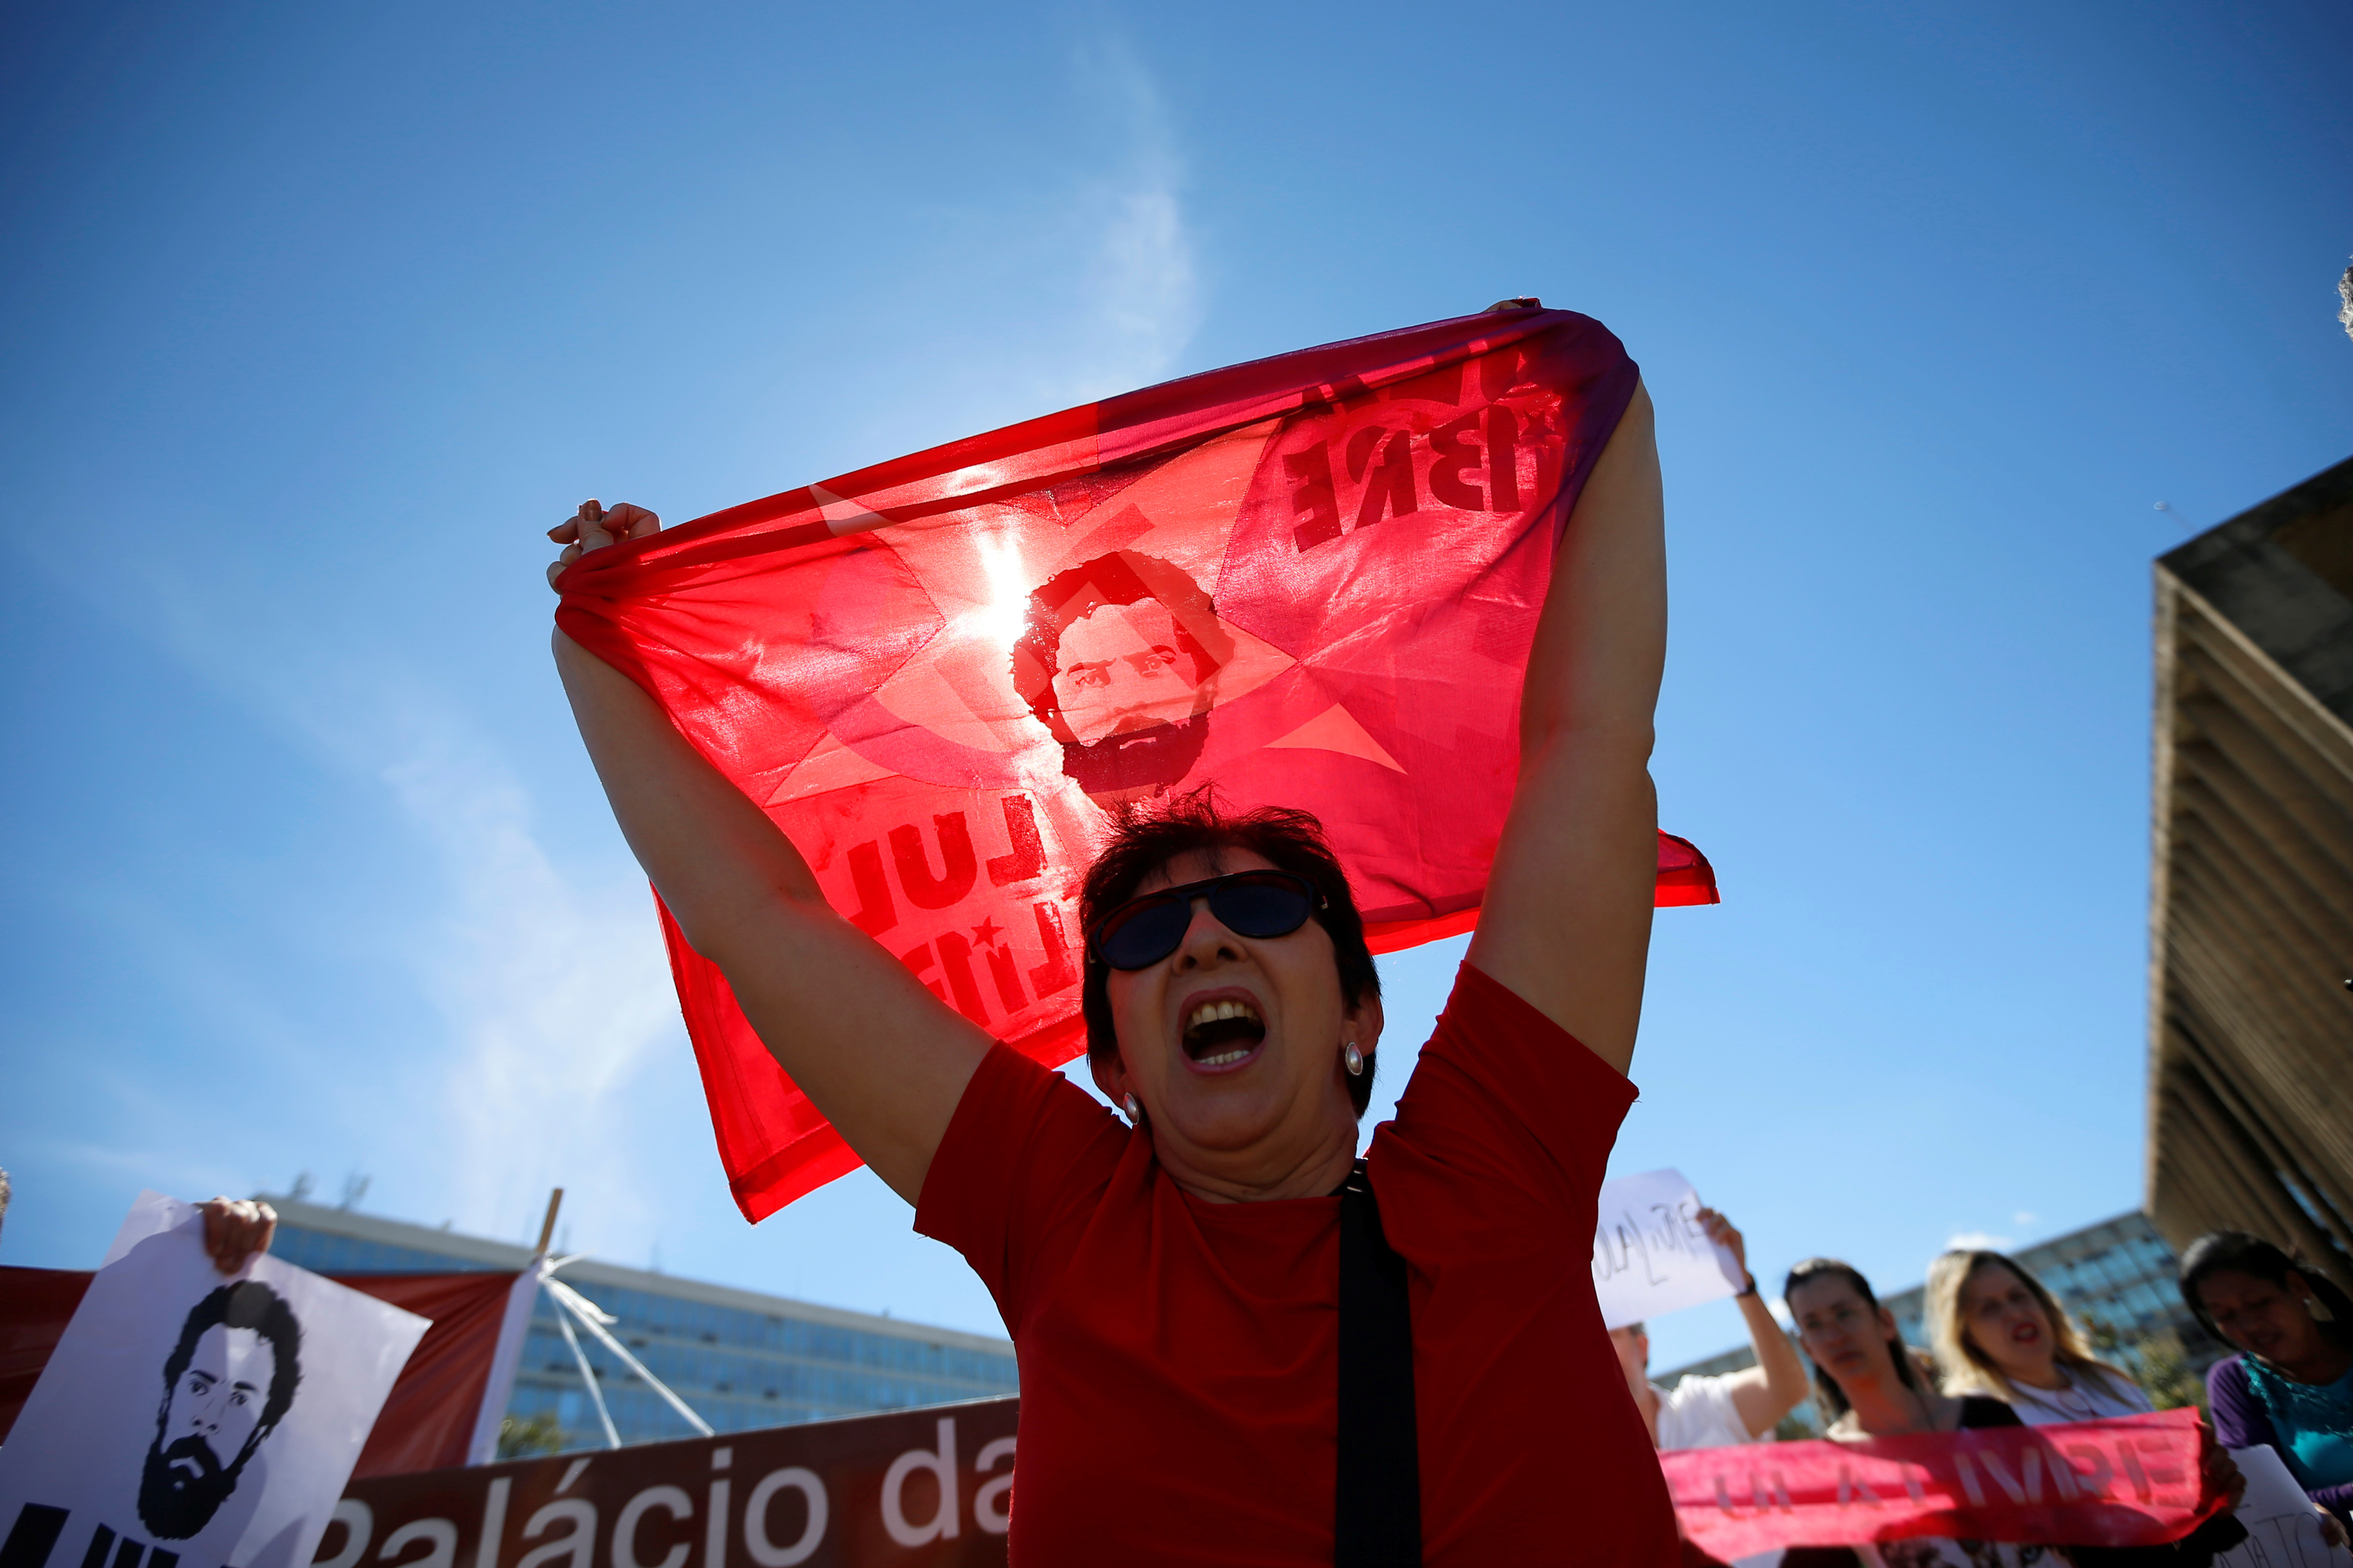 A supporter of Brazil's former President Luiz Inacio Lula da Silva attends a protest against the Brazil's Justice Minister Sergio Moro in front the Justice Ministry headquarters in Brasilia, Brazil June 10, 2019.